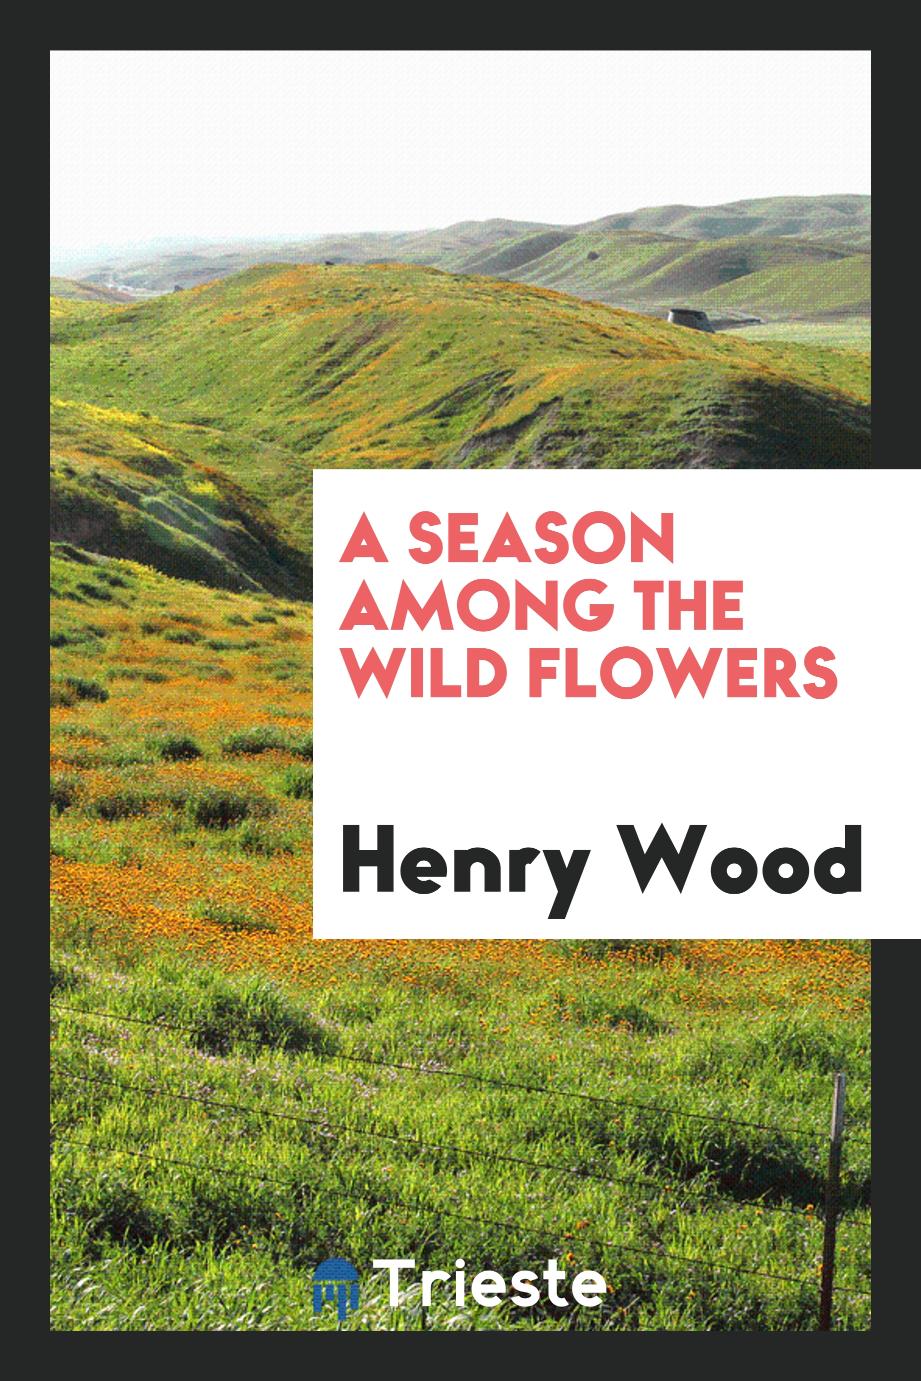 A season among the wild flowers